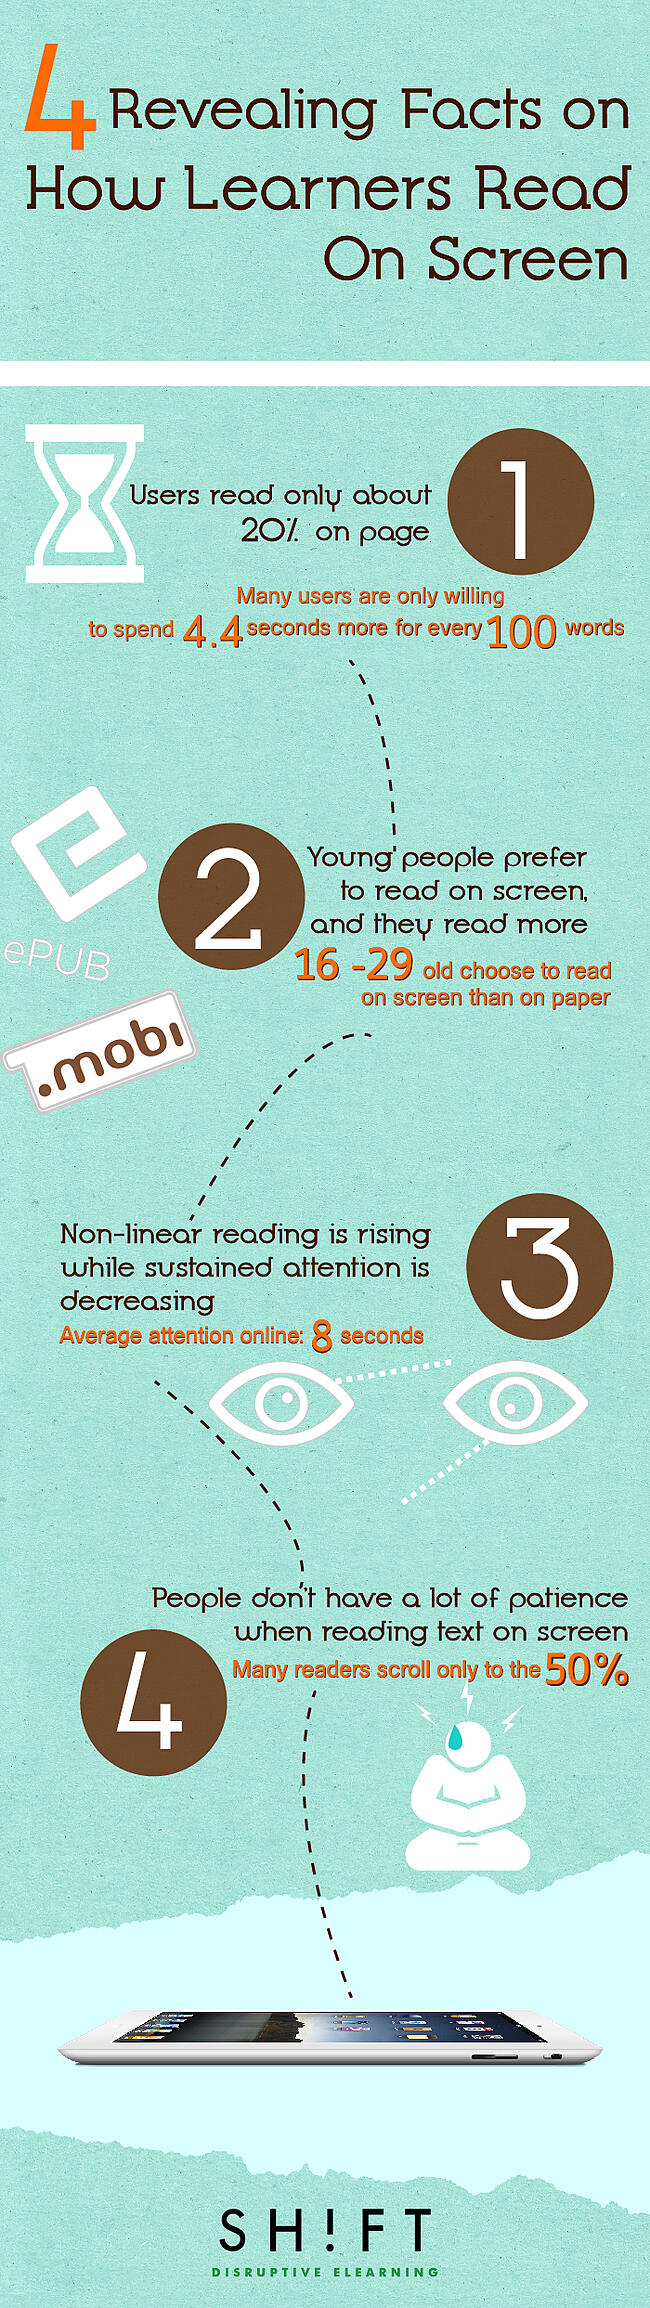 online reading habits